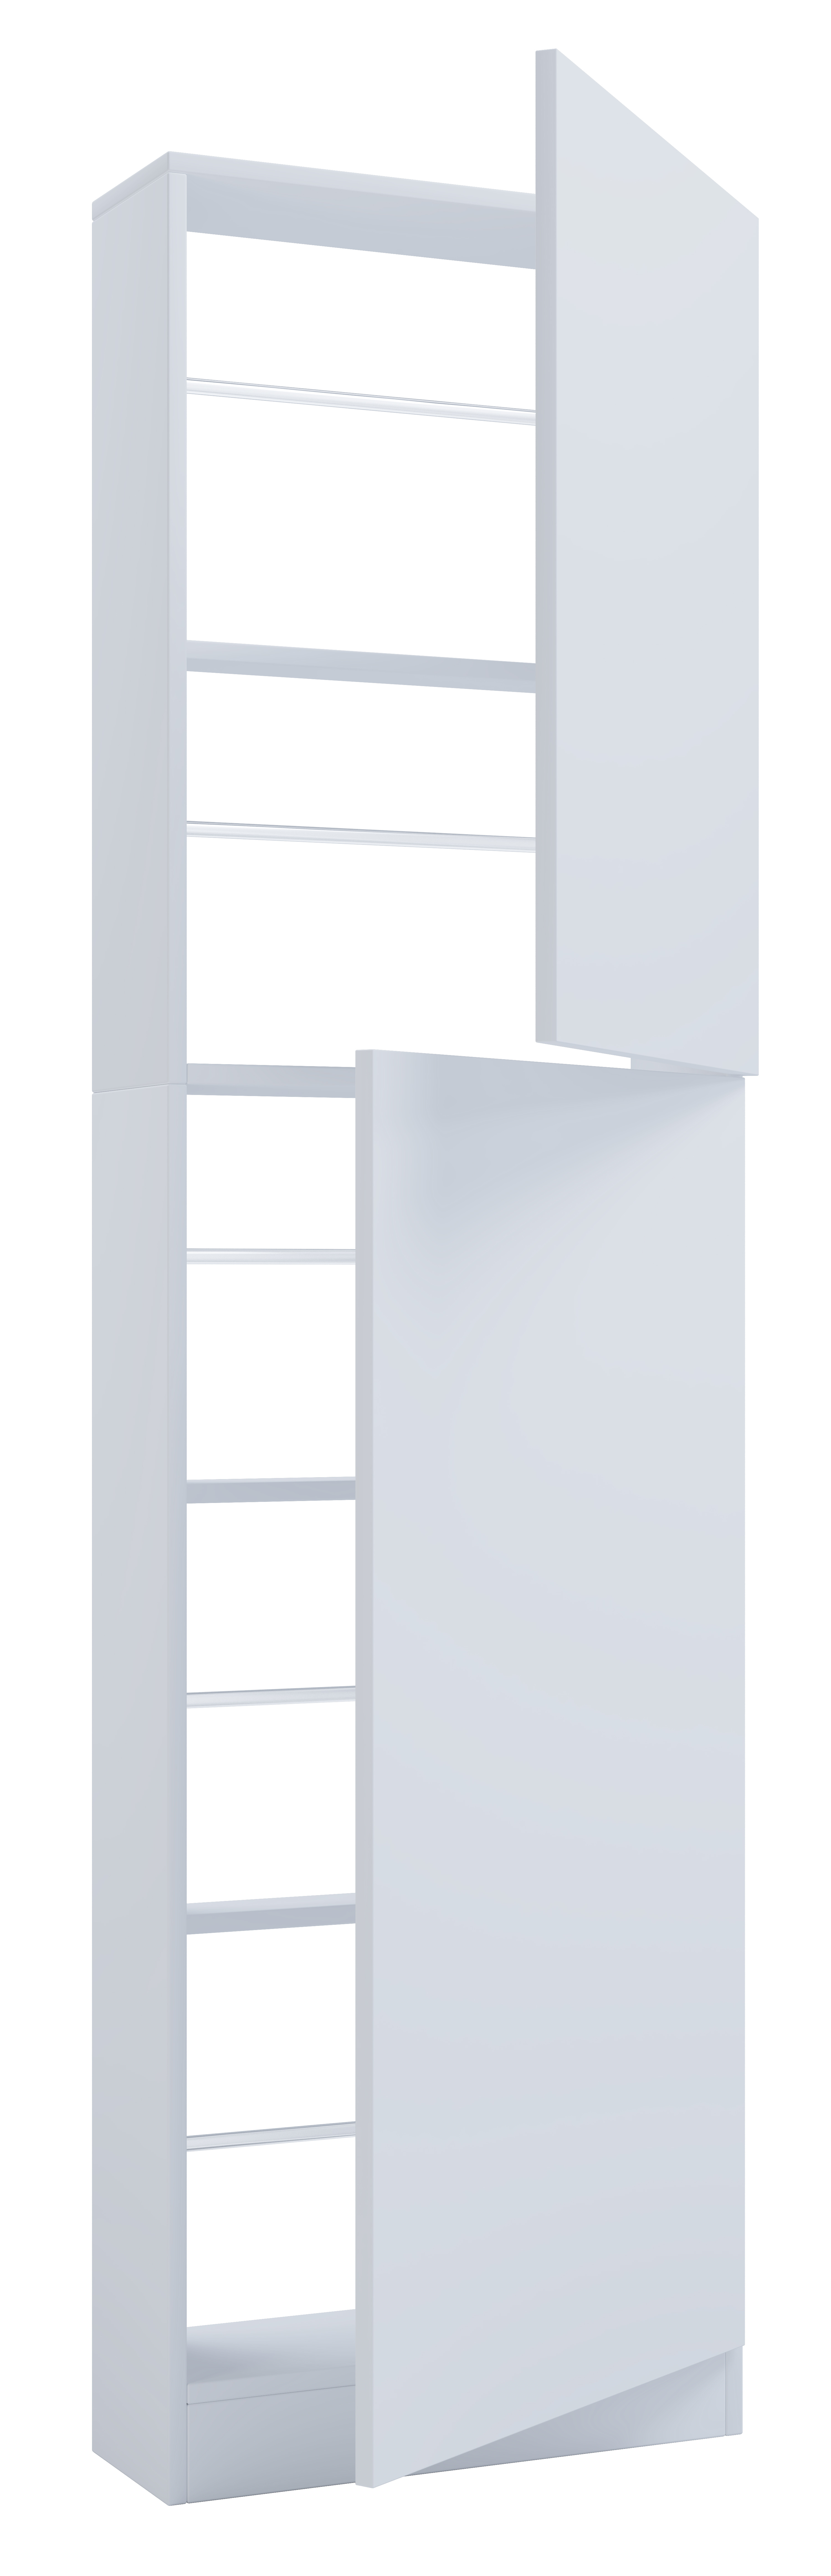 VCM NORDIC Fulisa XL skoskåp, w. 2 dörrar, 4 hyllor - vitt trä